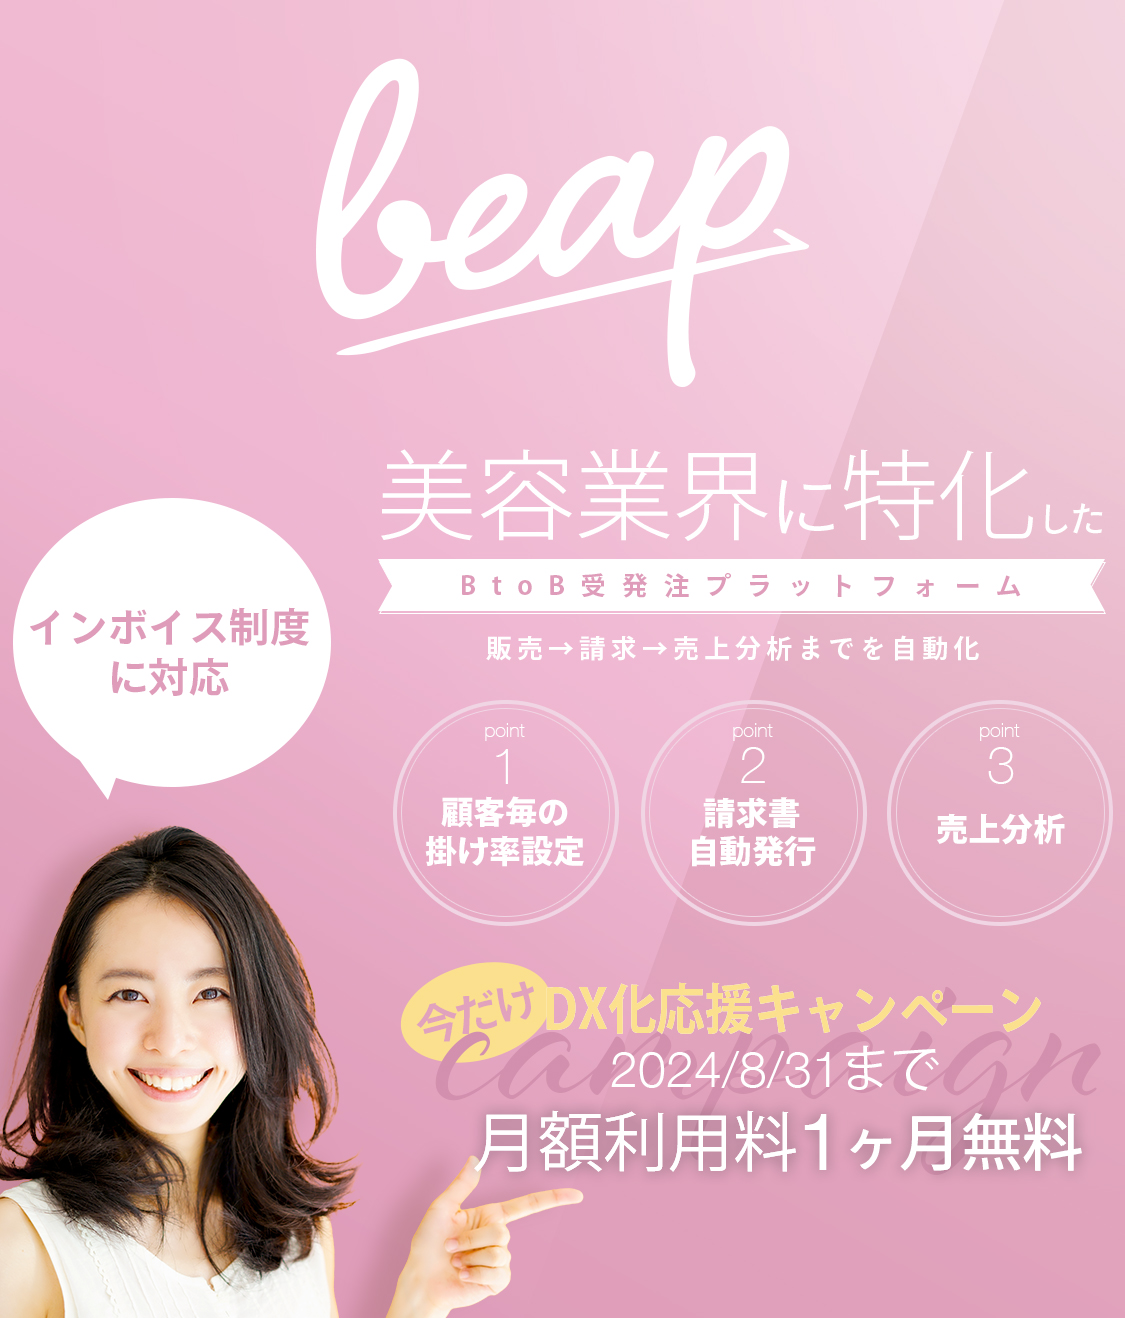 beap │ 美容業界に特化したBtoB受発注プラットフォーム